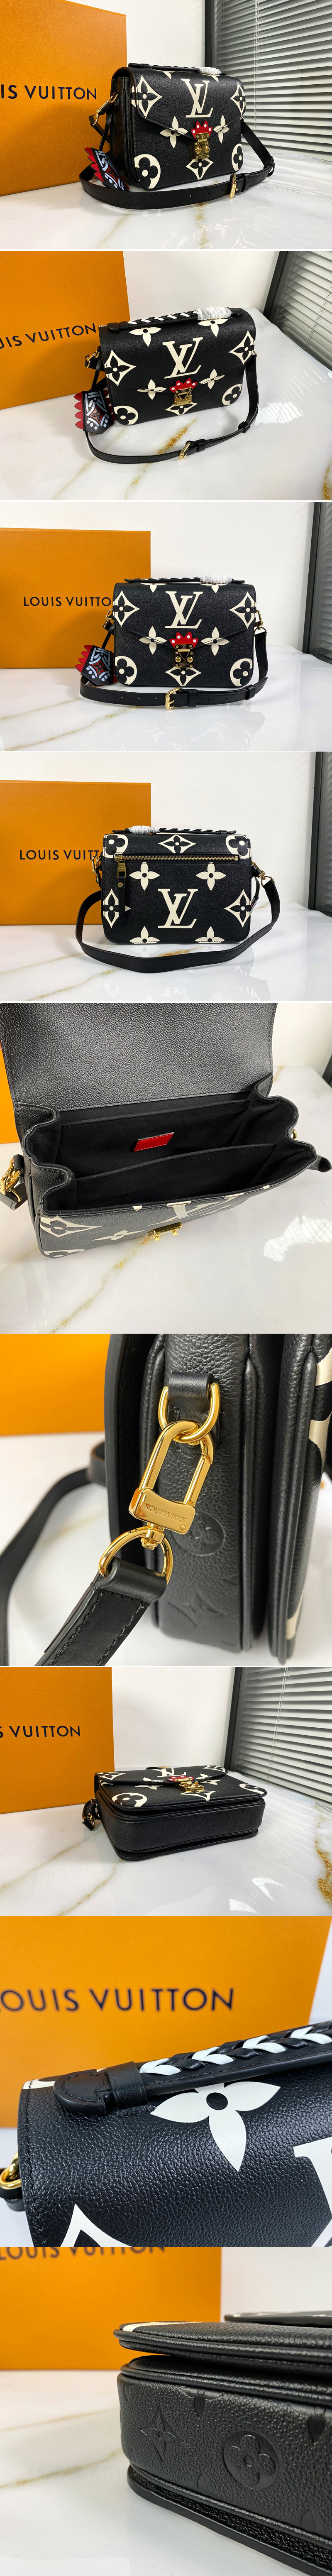 Replica Louis Vuitton M45385 LV Crafty Pochette Métis handbag in Black Embossed grained cowhide leather